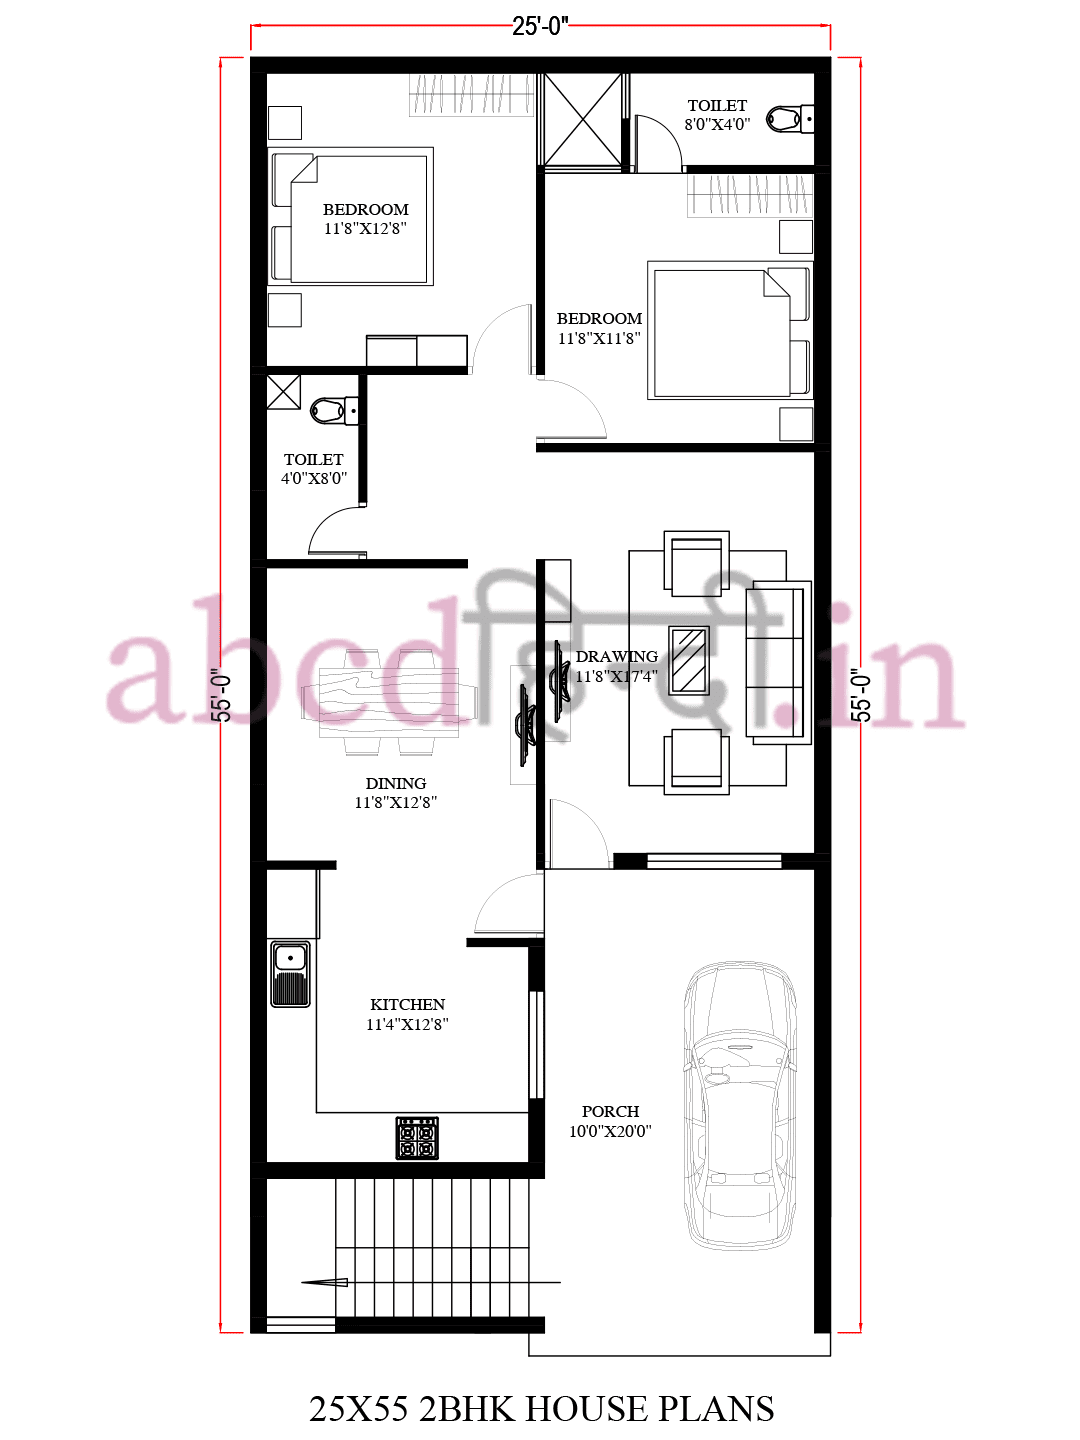 25x55 house plans